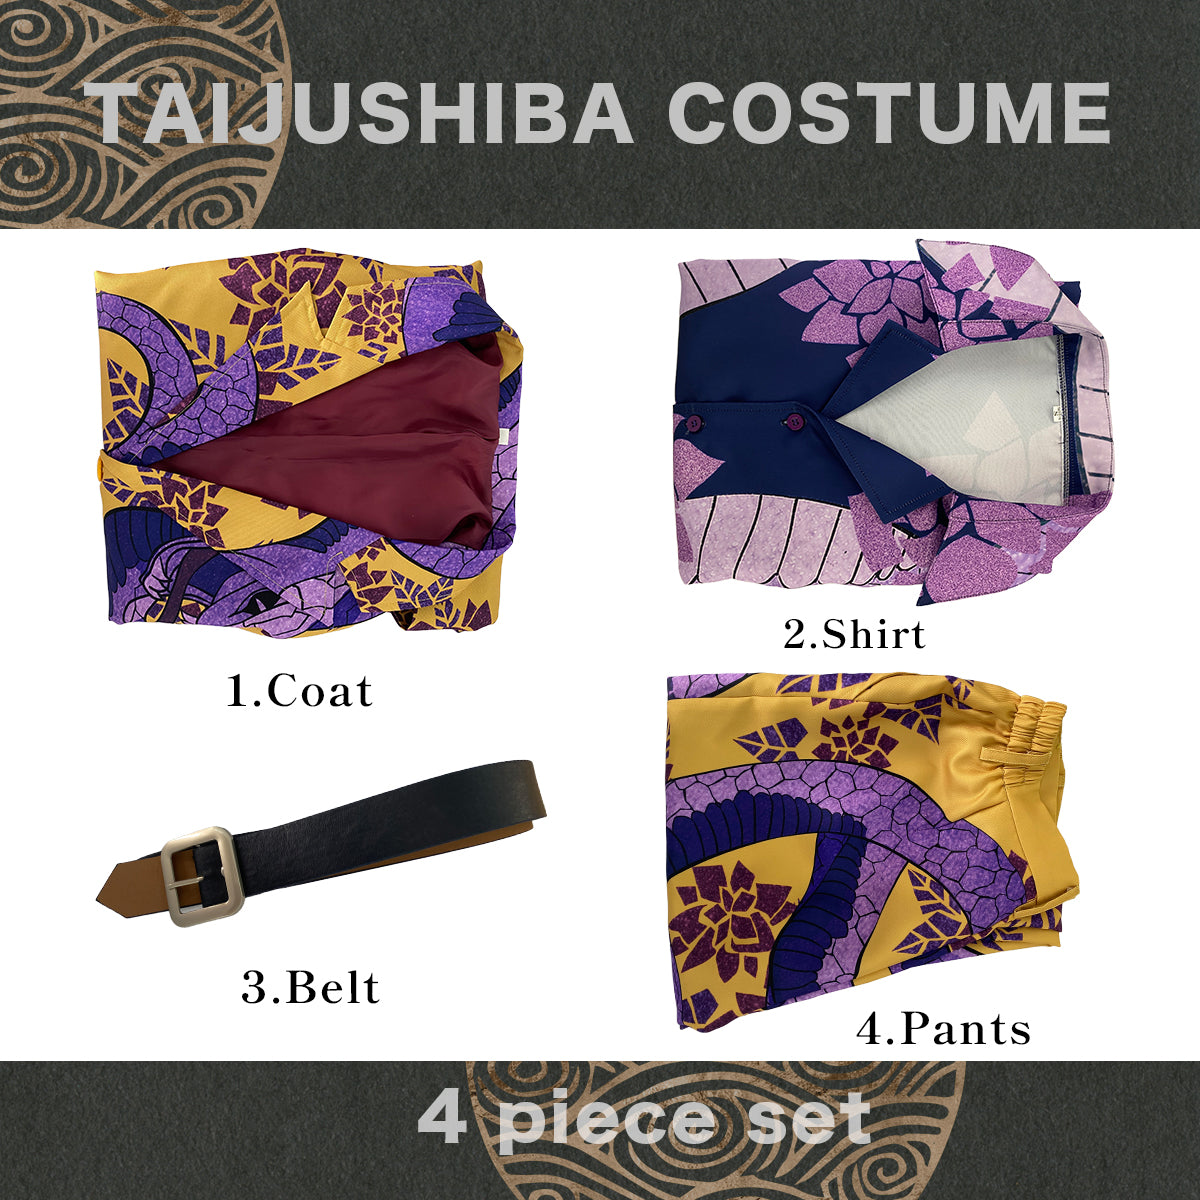 HOLOUN Tokyo Anime Cosplay Costumes Original Exhibition Suit Shiba Taiyu Party Halloween Casual Wearing